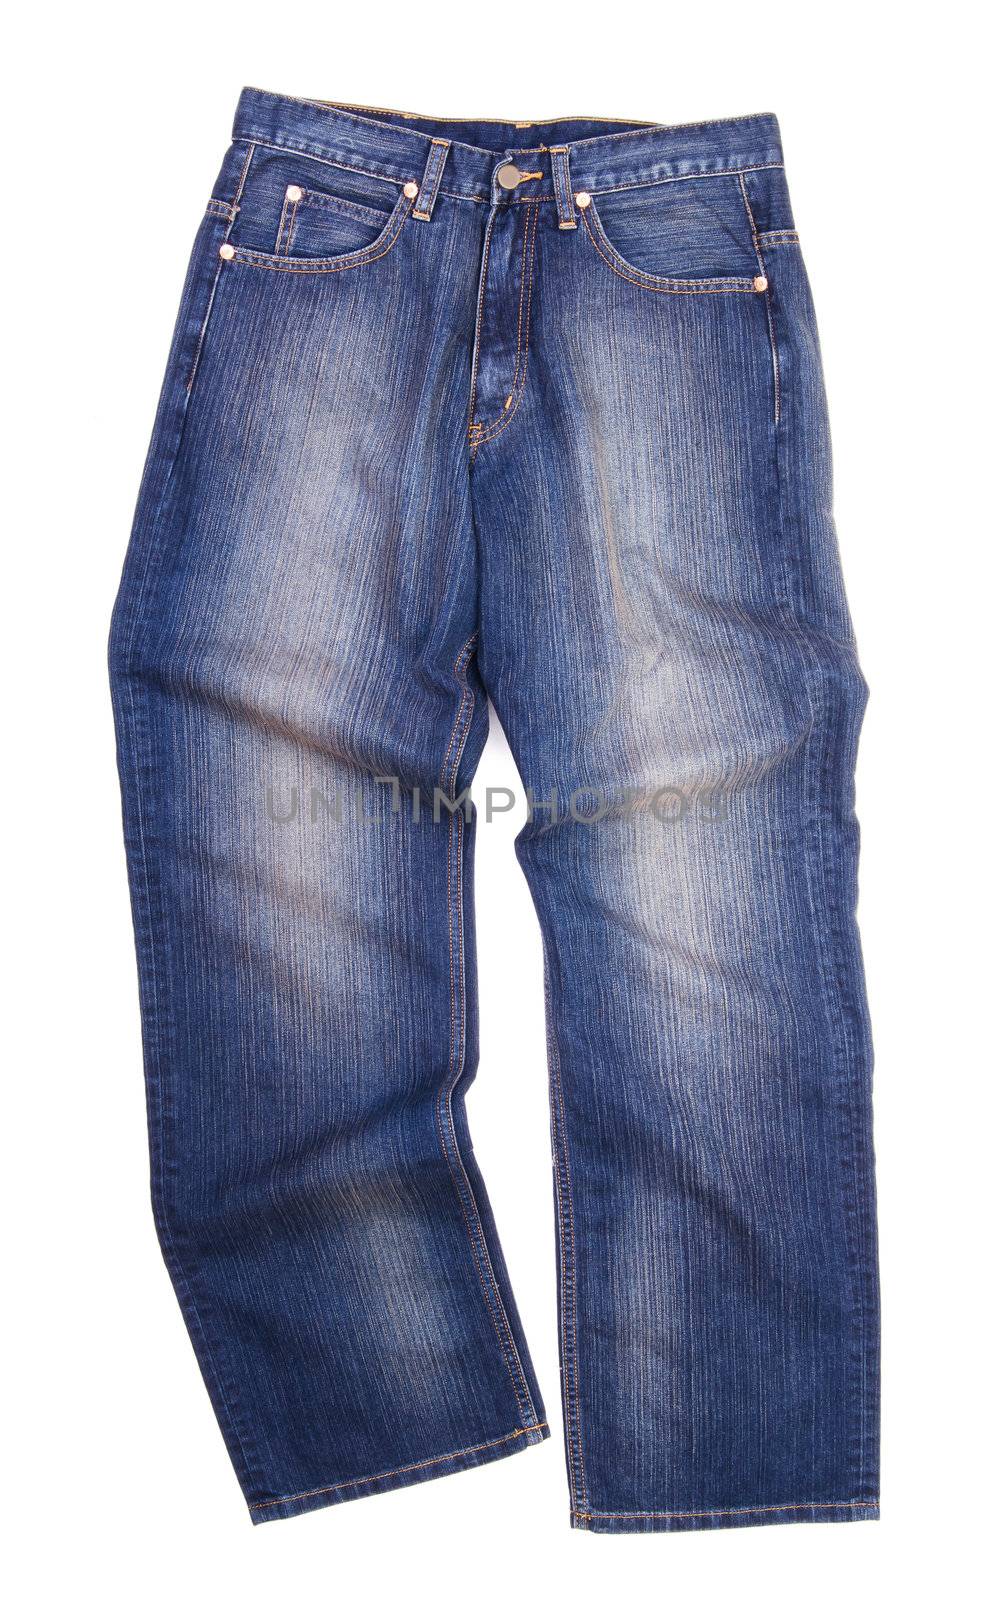 jeans, stylish jeans on blackground by heinteh